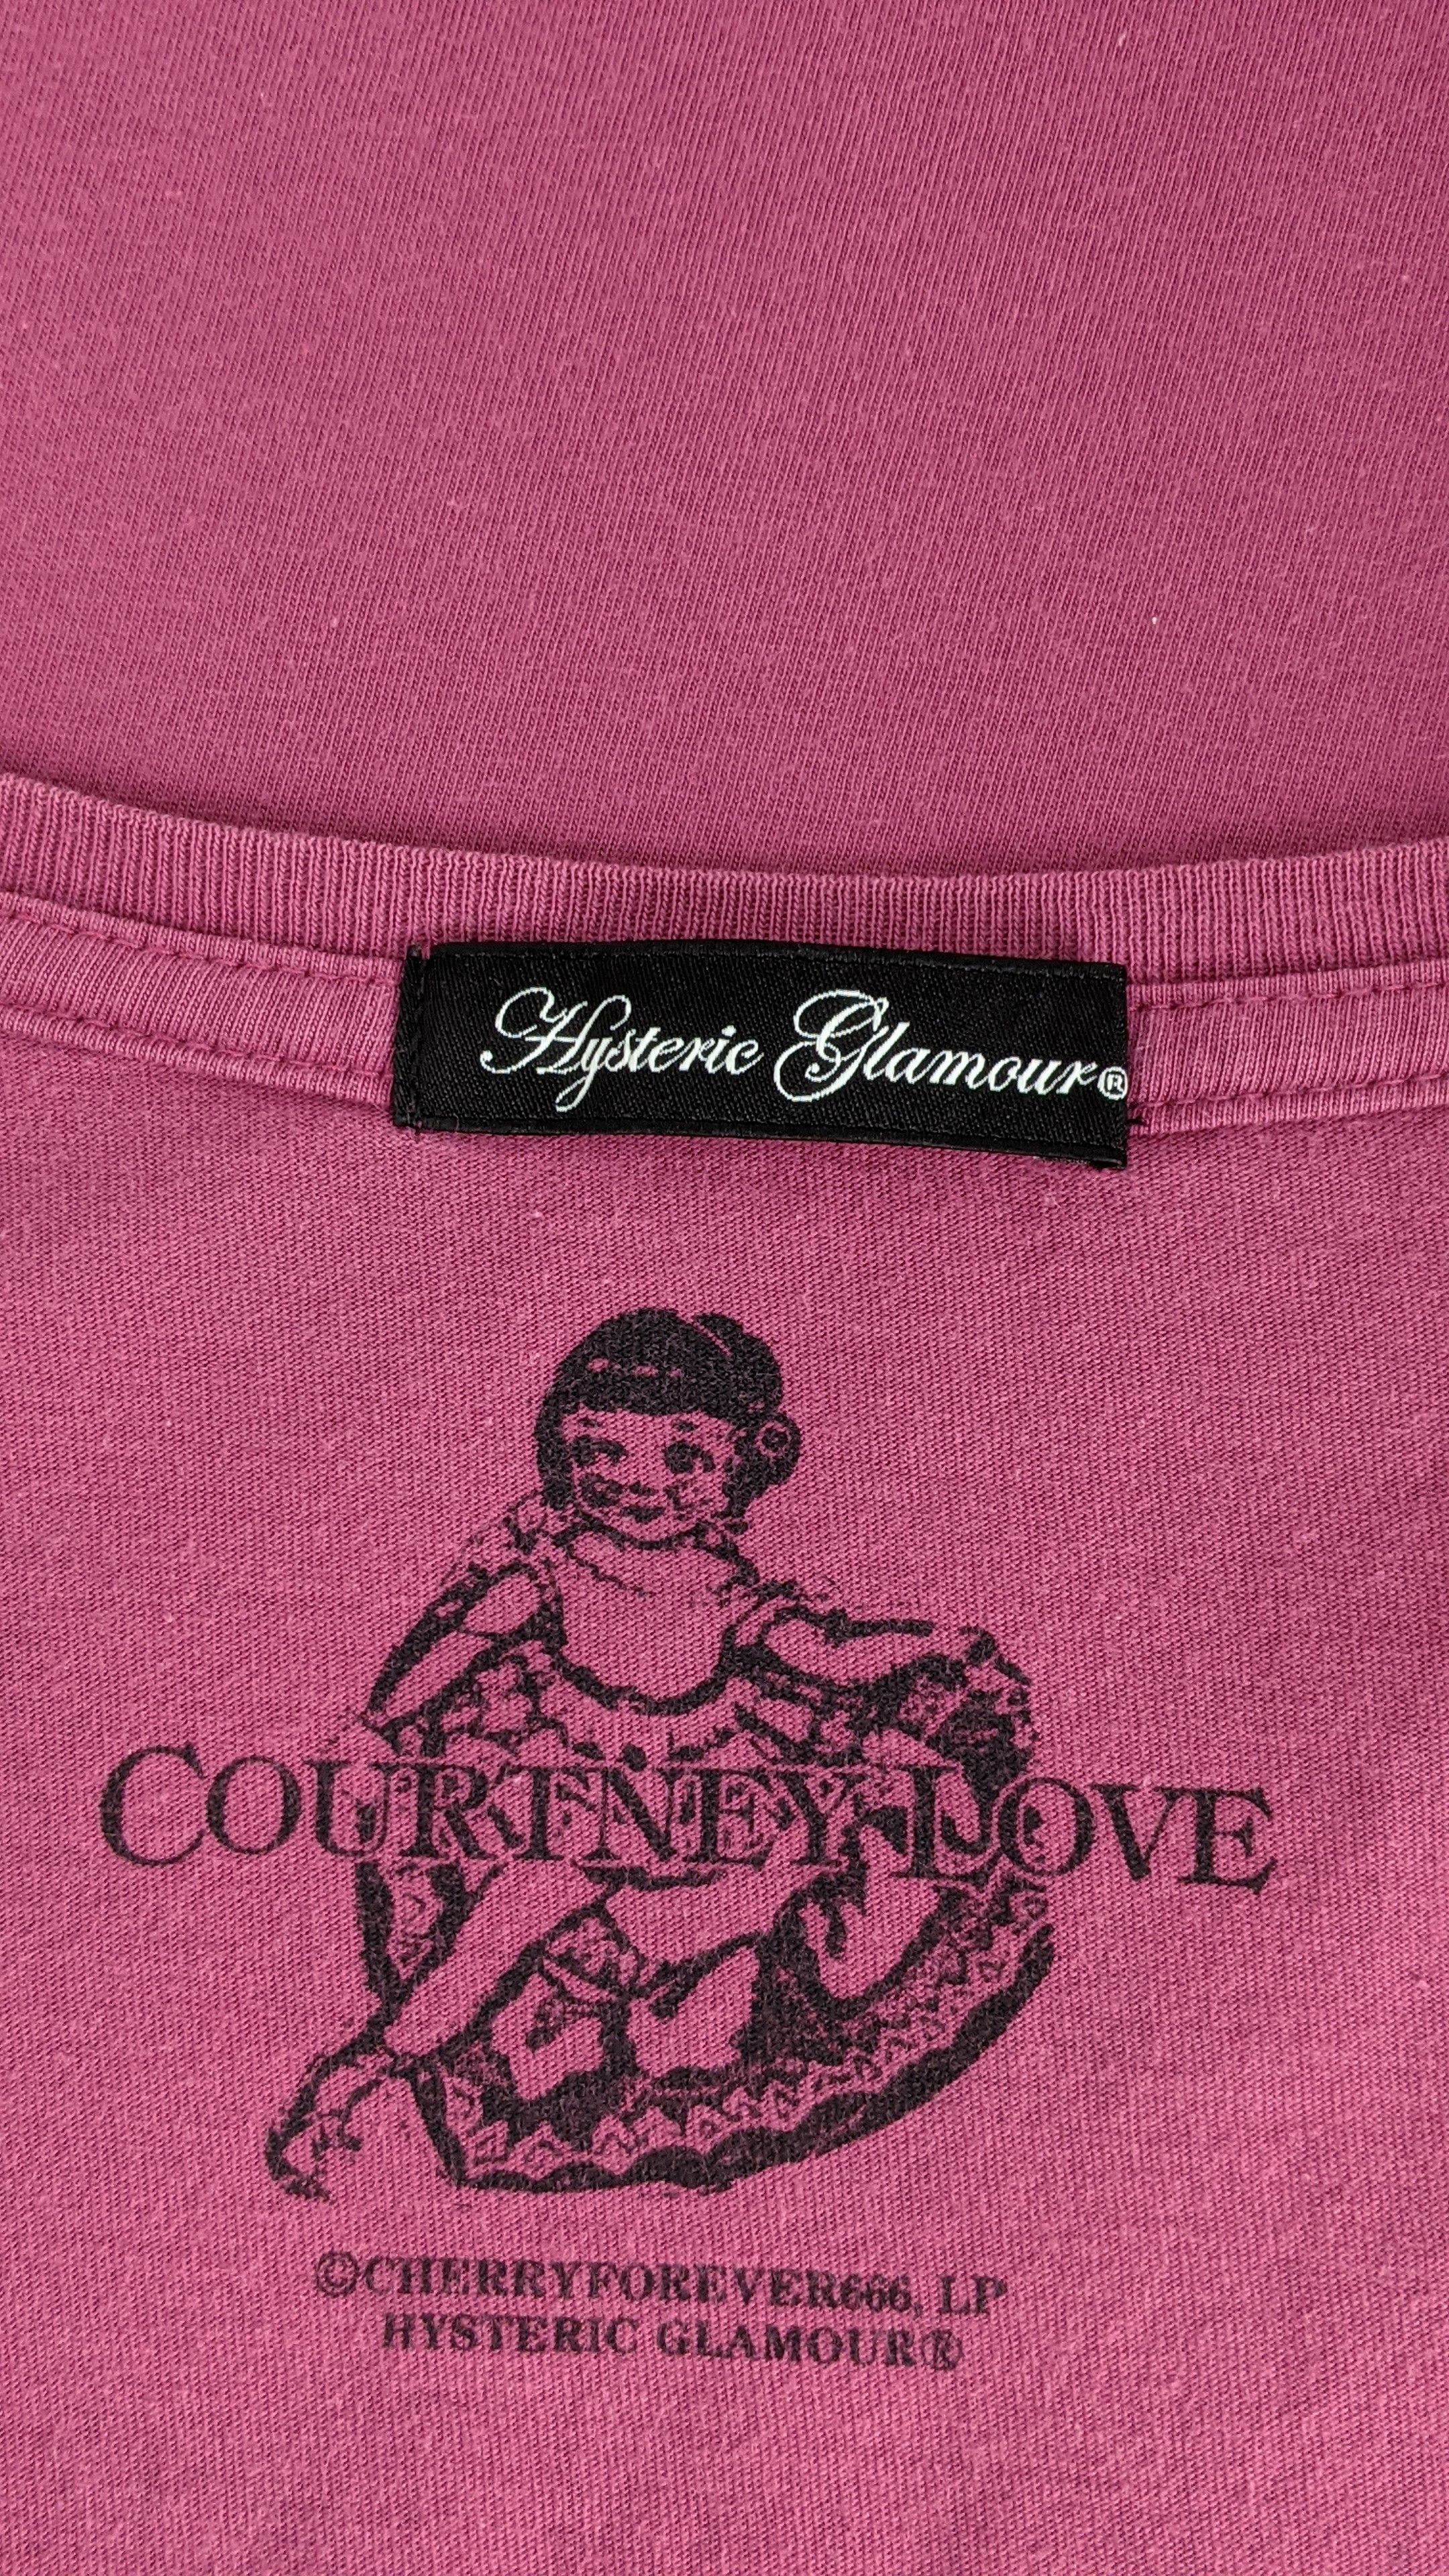 Hysteric Glamour x Courtney Love Hole shirt - 4